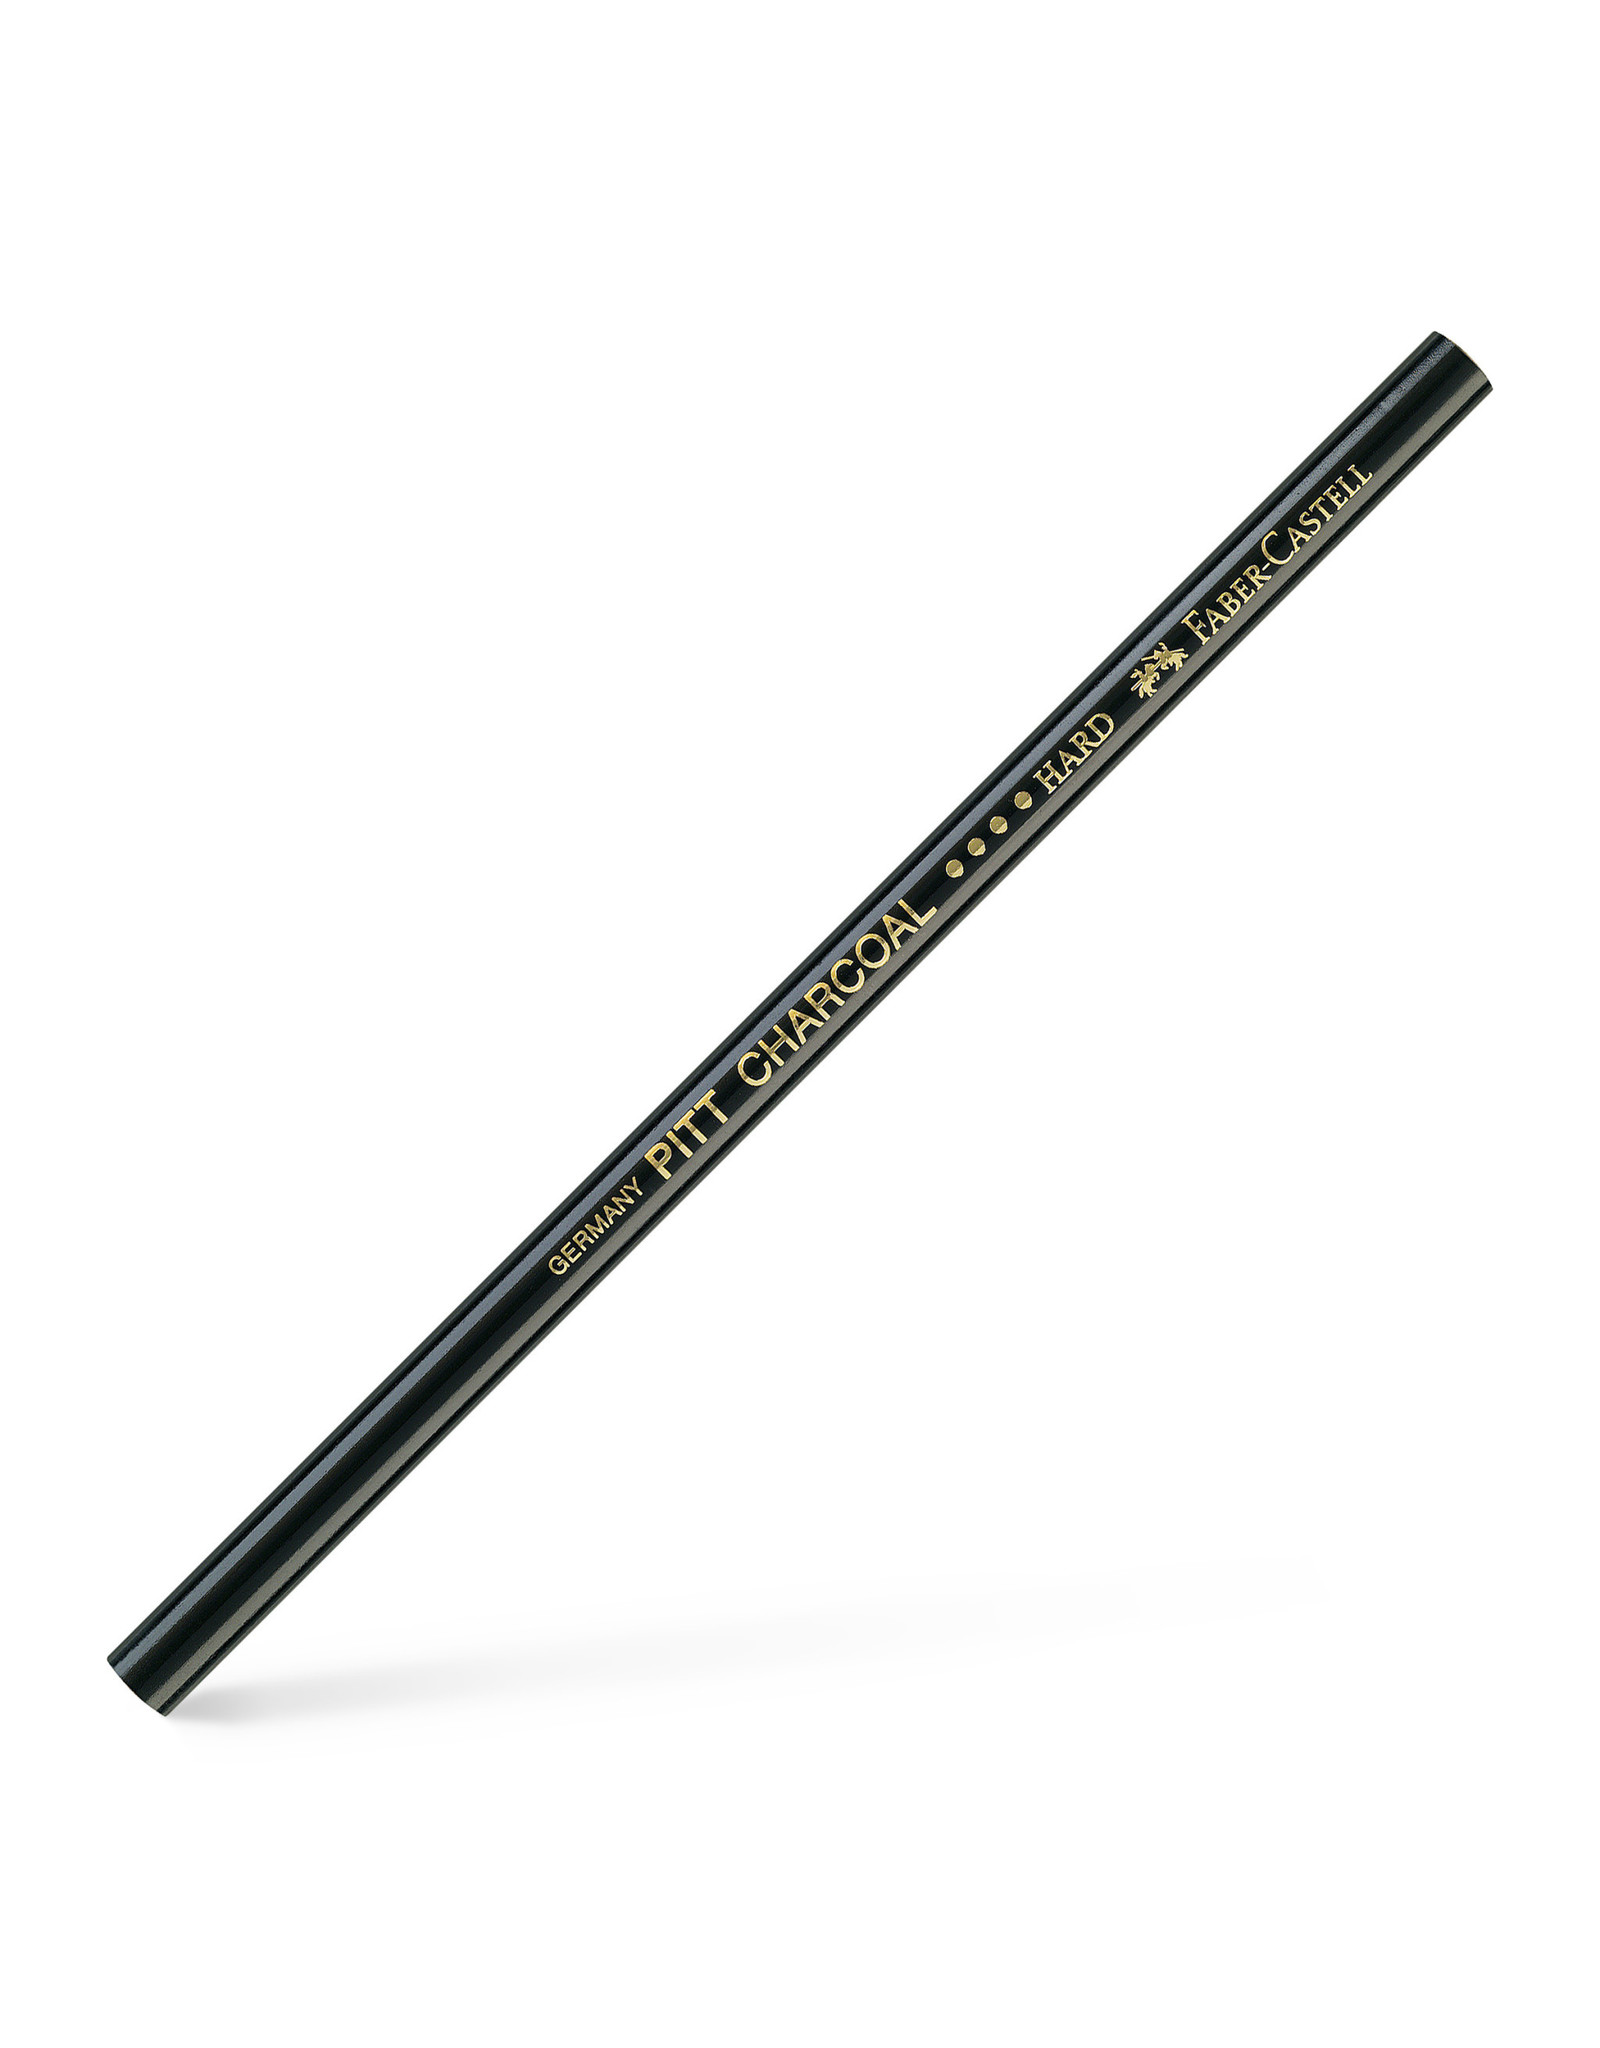 Pitt natural charcoal pencil, set of 3, soft, medium, hard